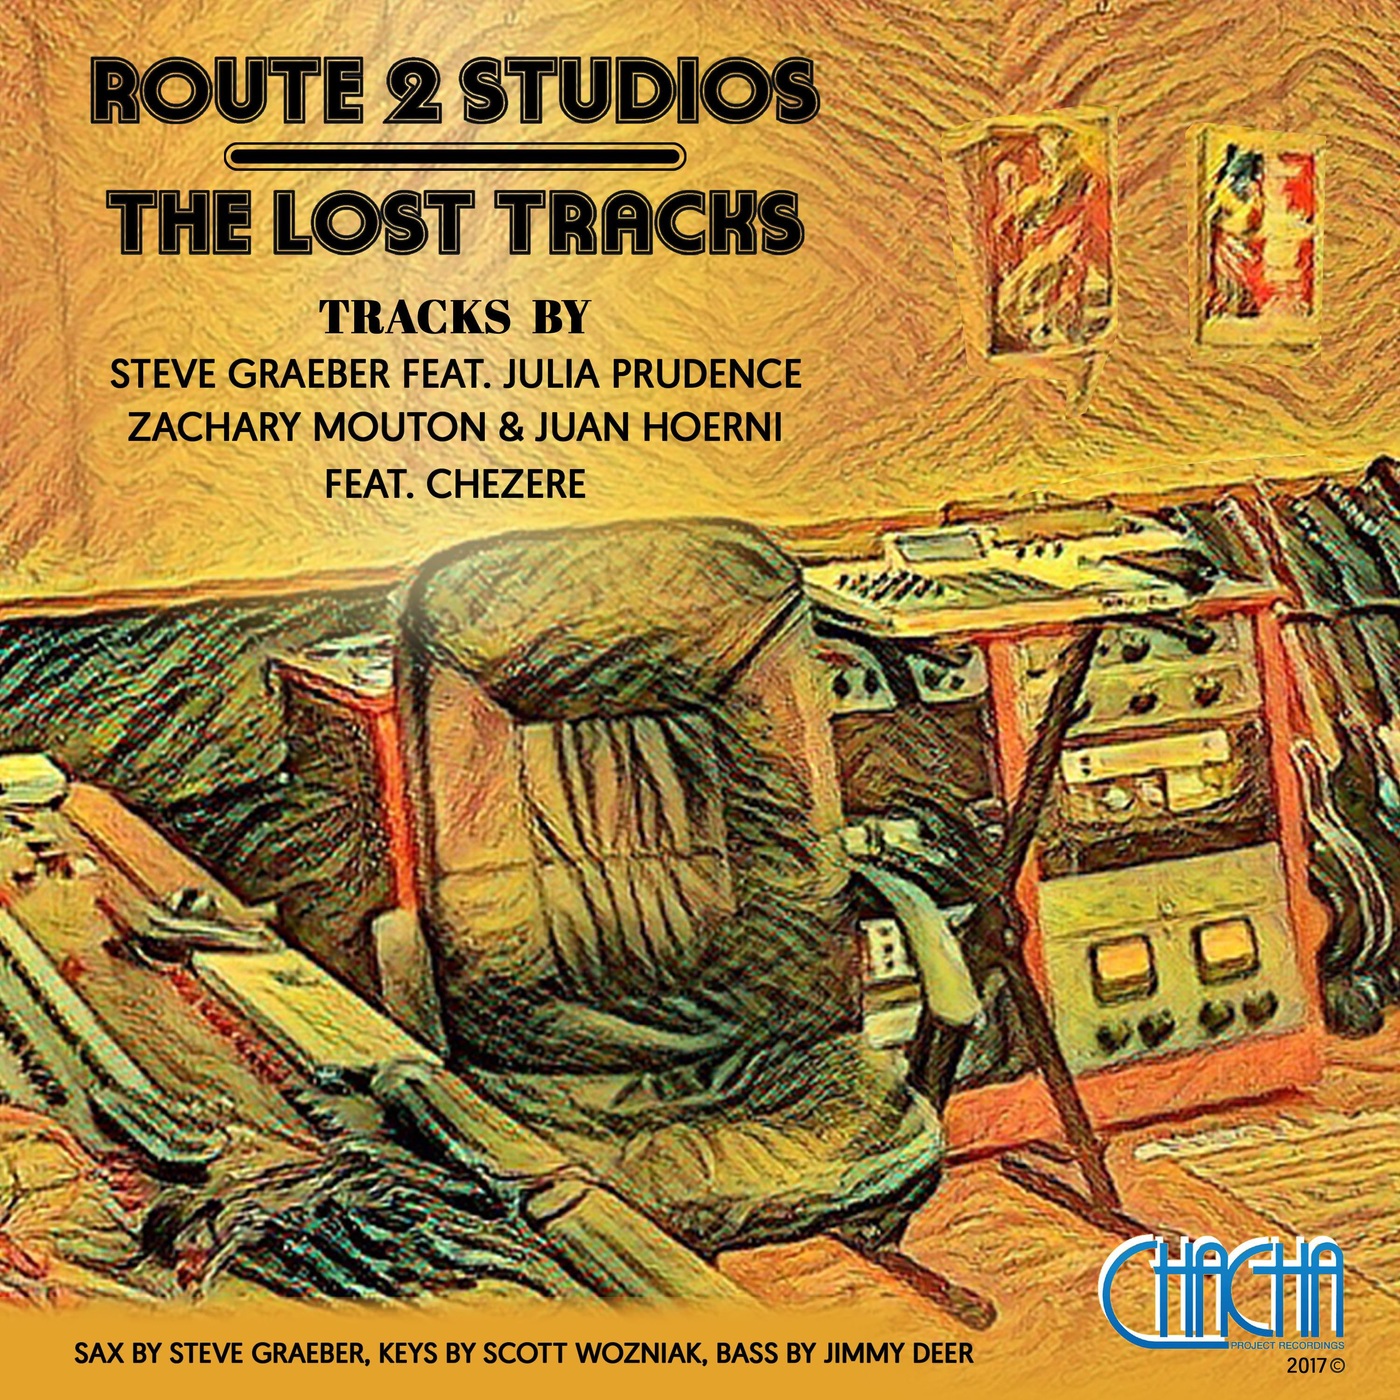 VA - The Lost Tracks / Cha Cha Project Recordings